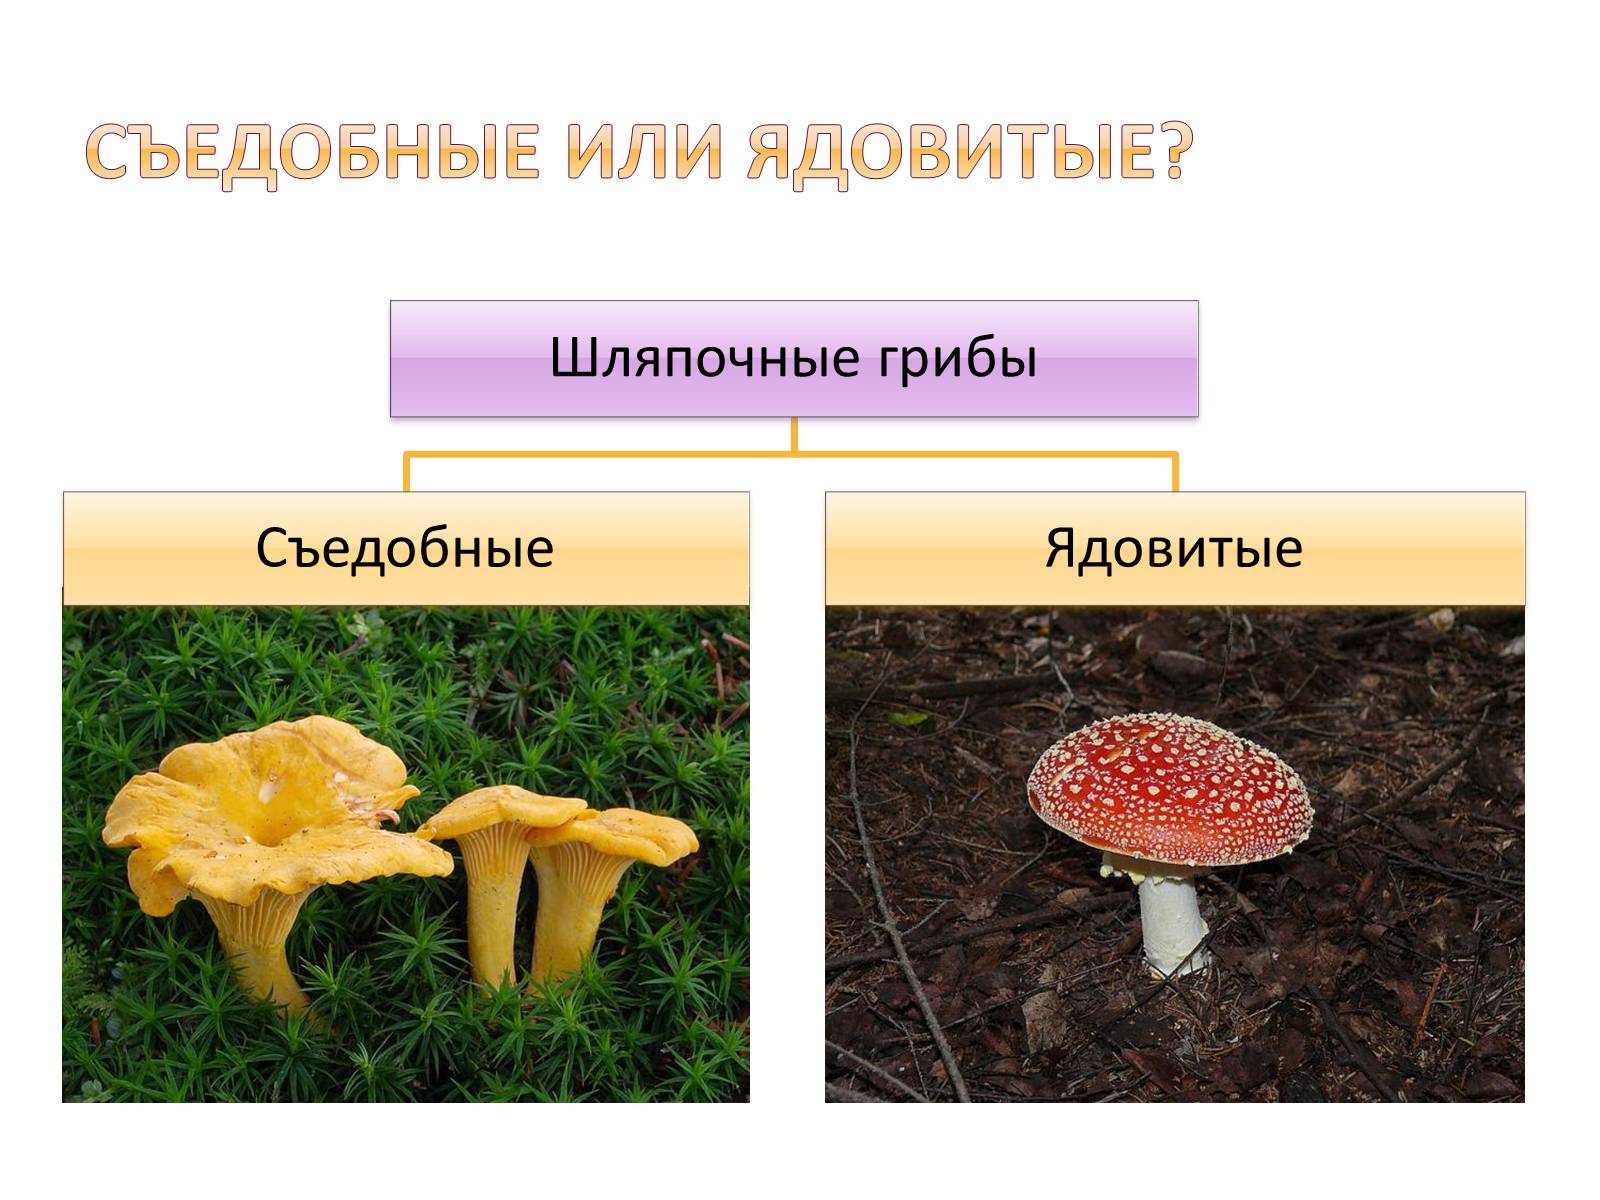 Презентація на тему «Шляпочные грибы» - Слайд #9